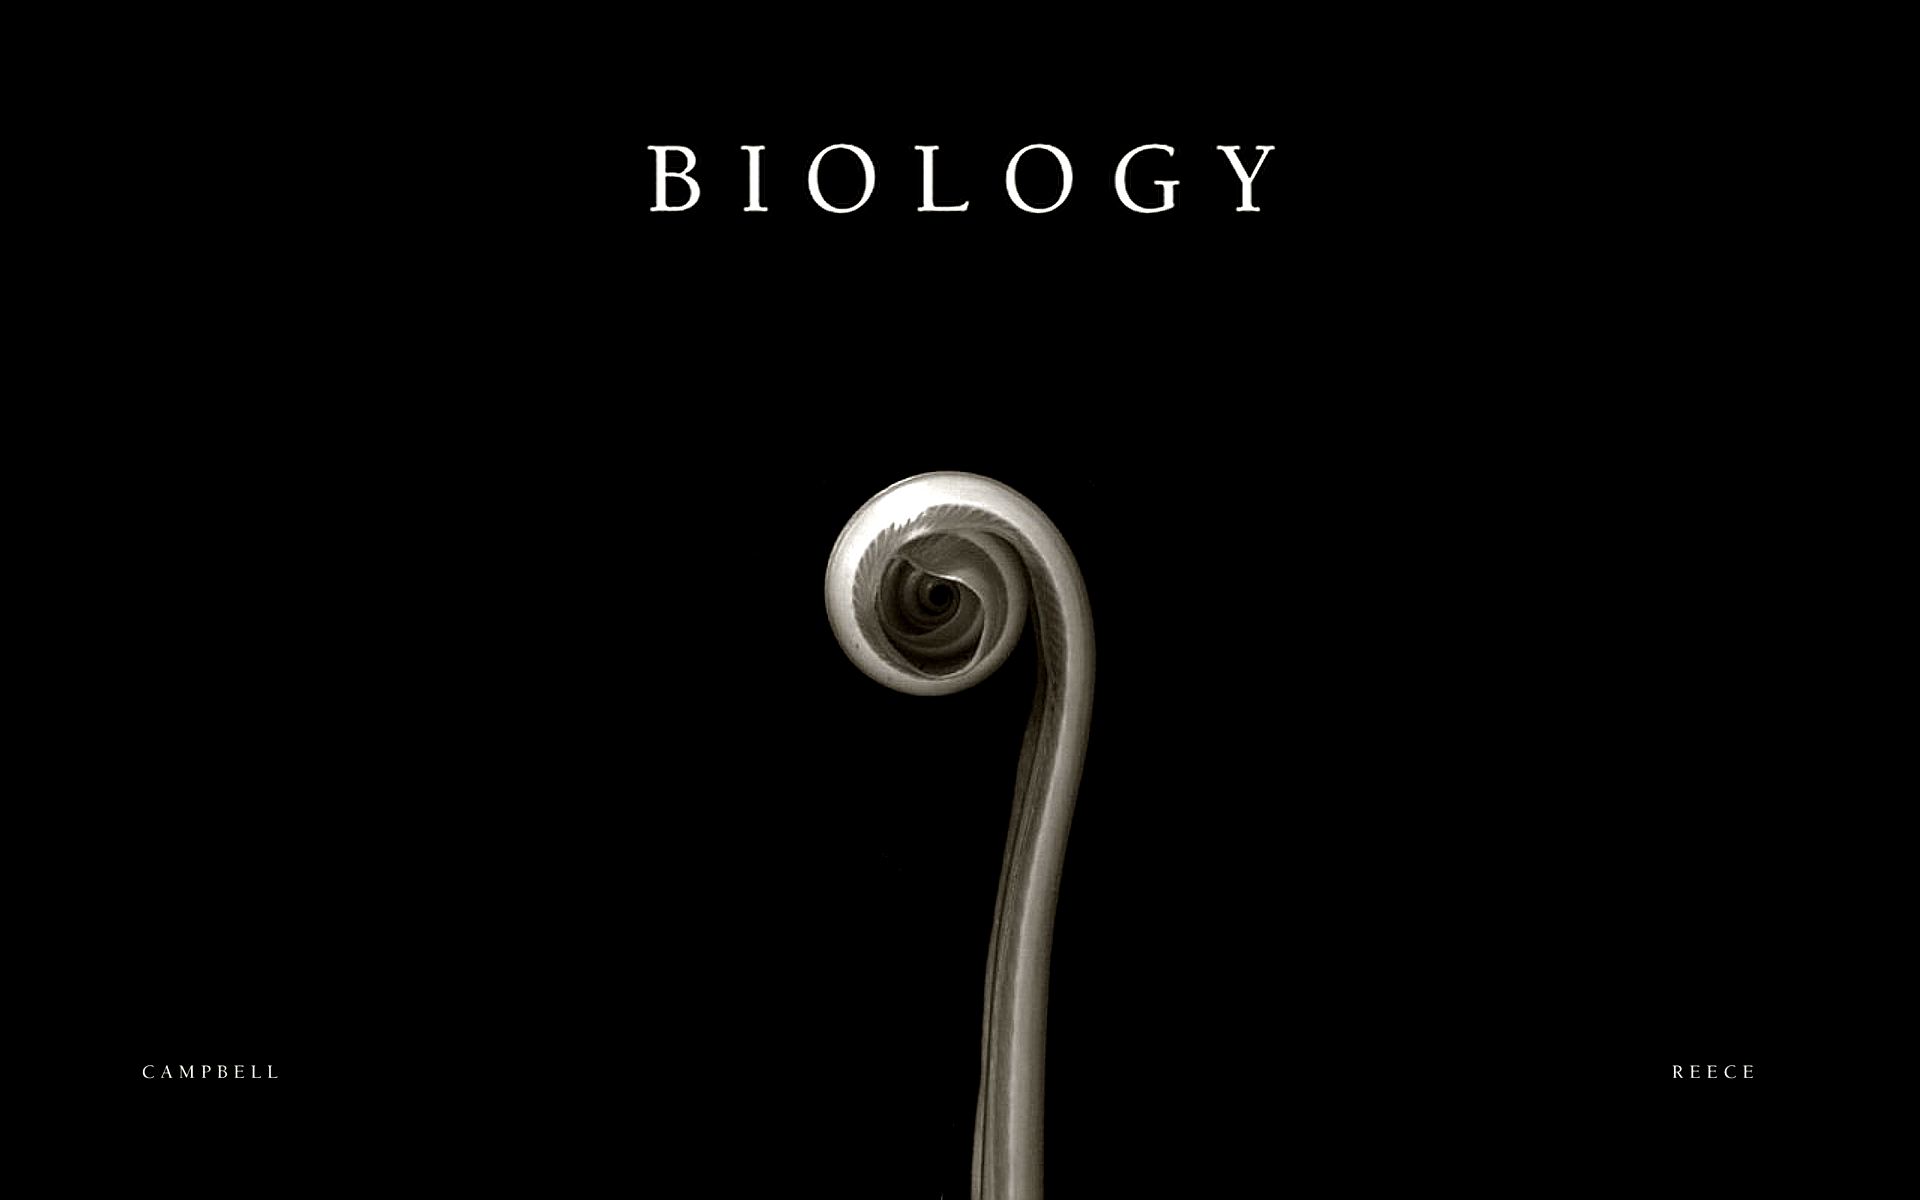 HD Biology Wallpaper | Wallpapers, Backgrounds, Images, Art Photos.